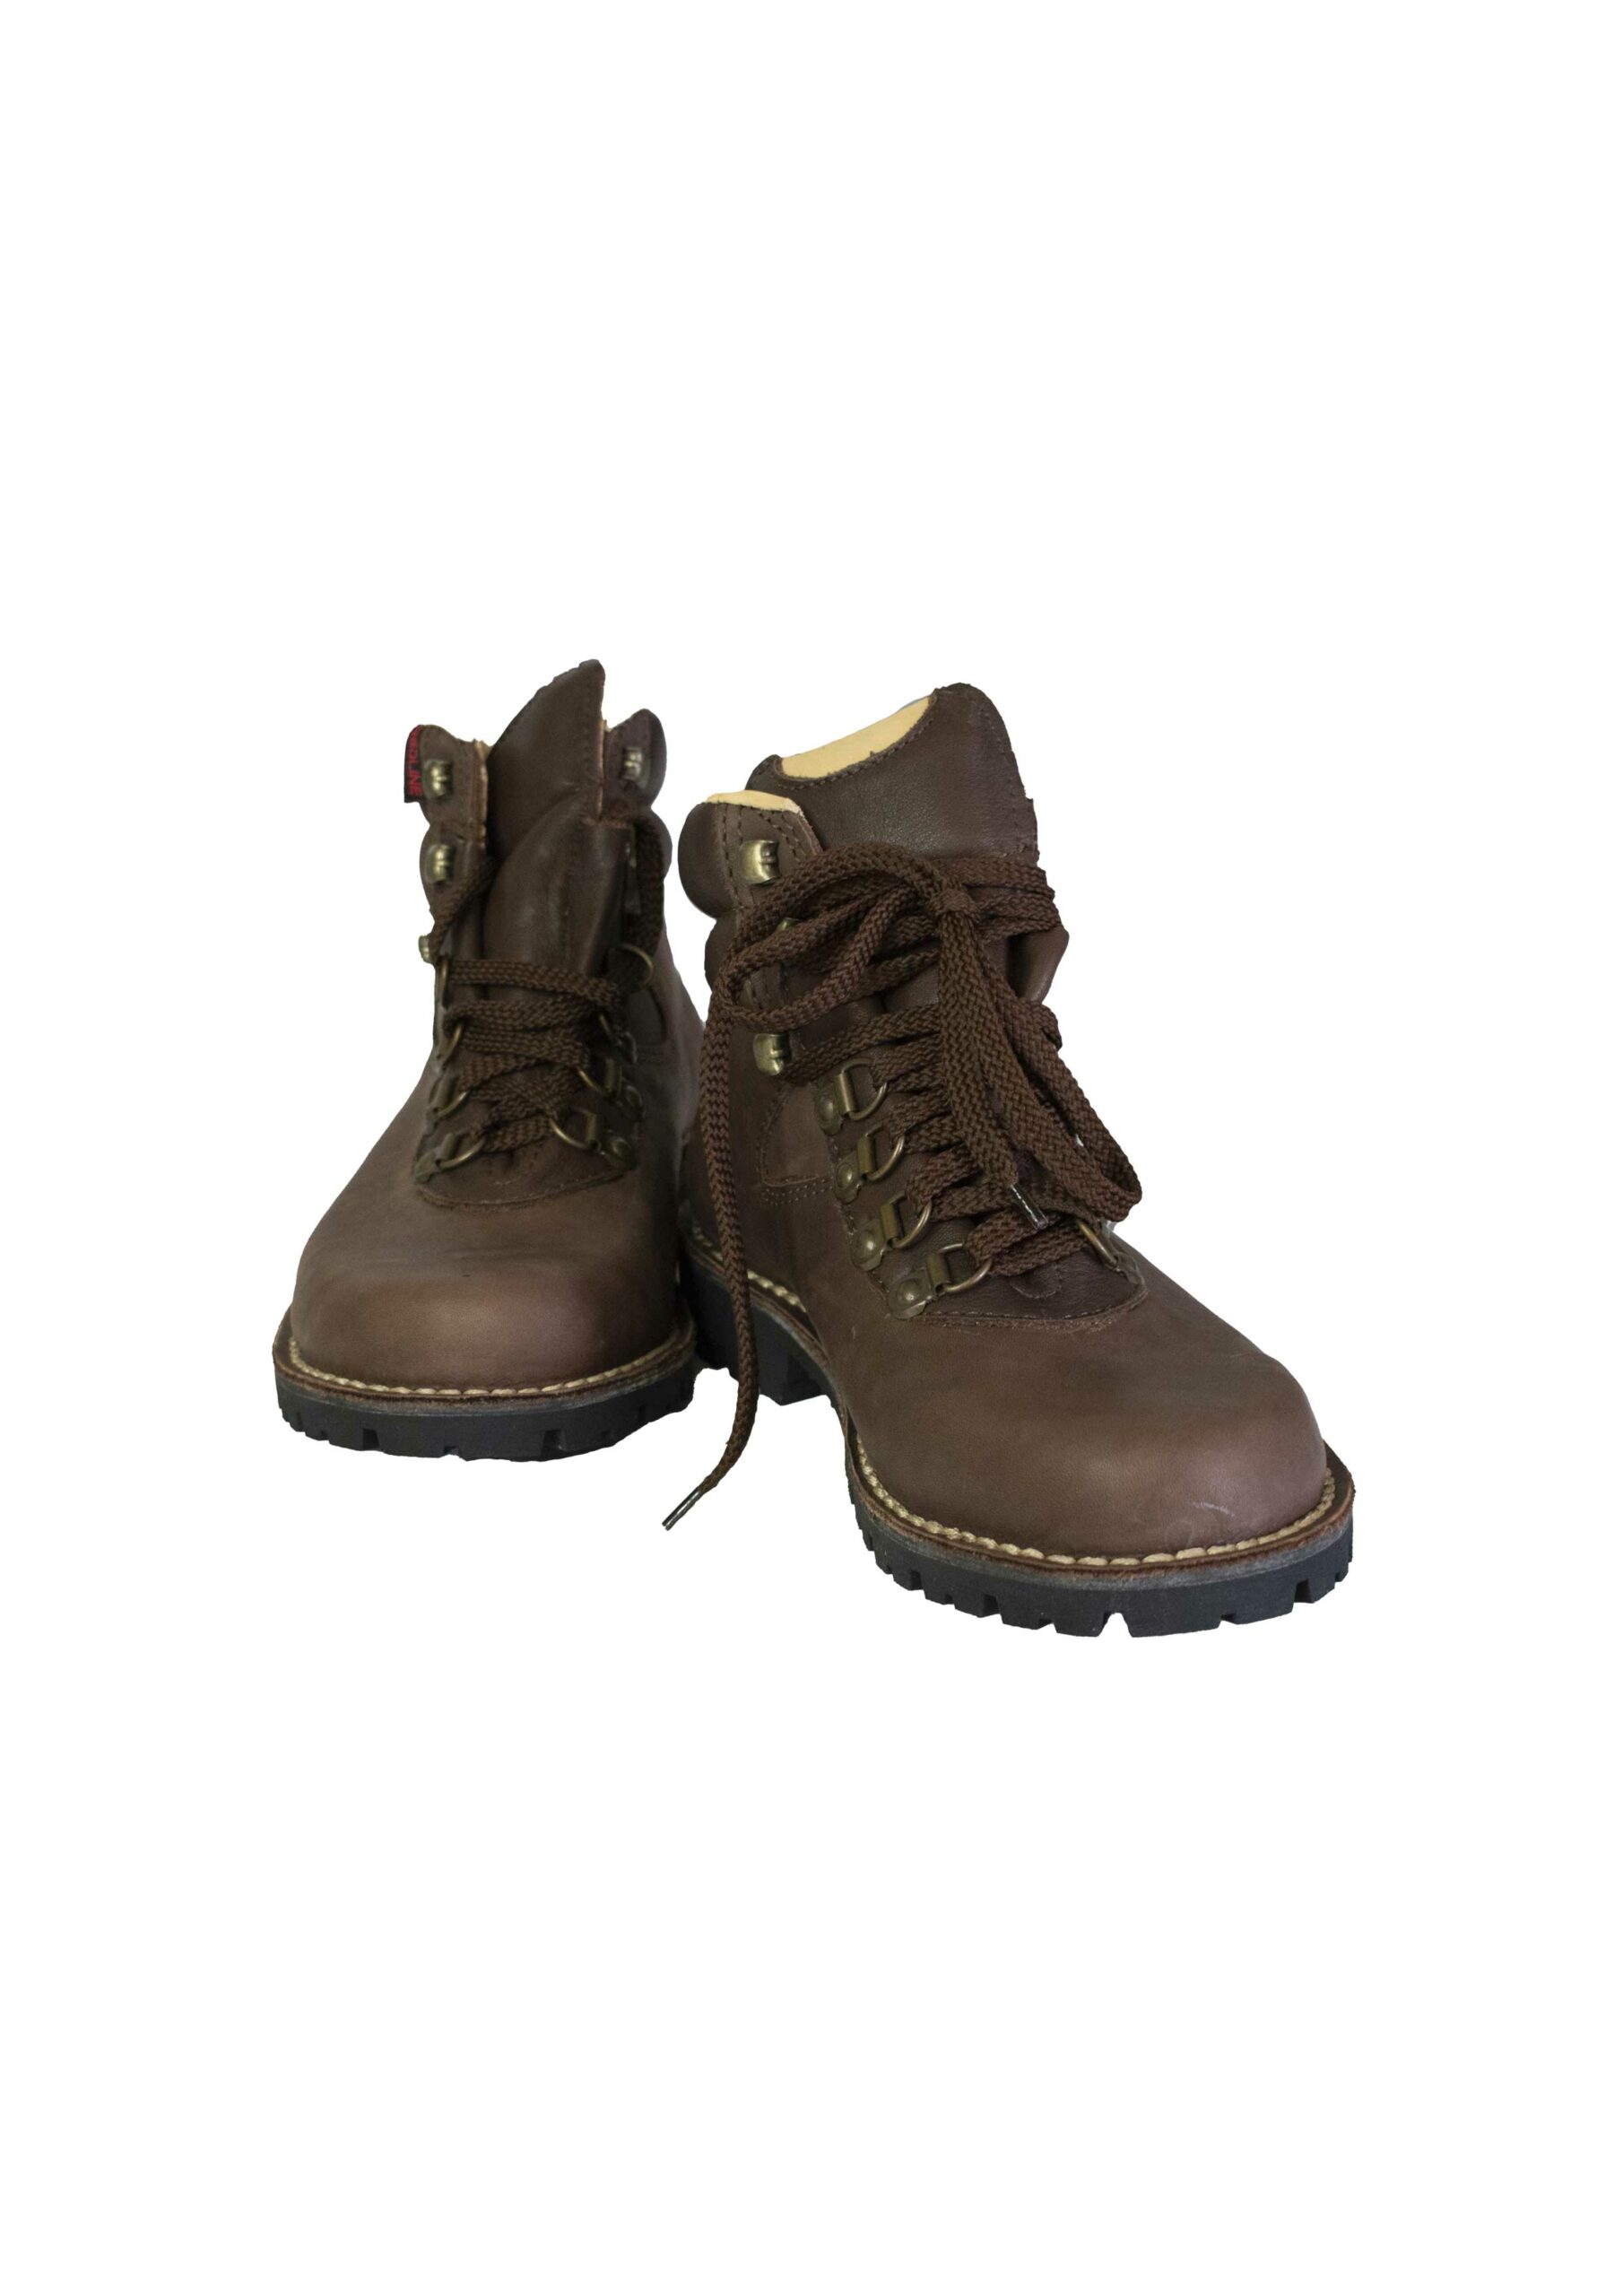 Kilimanjaro - Double Leather Boot - Big John Online Clothing Company